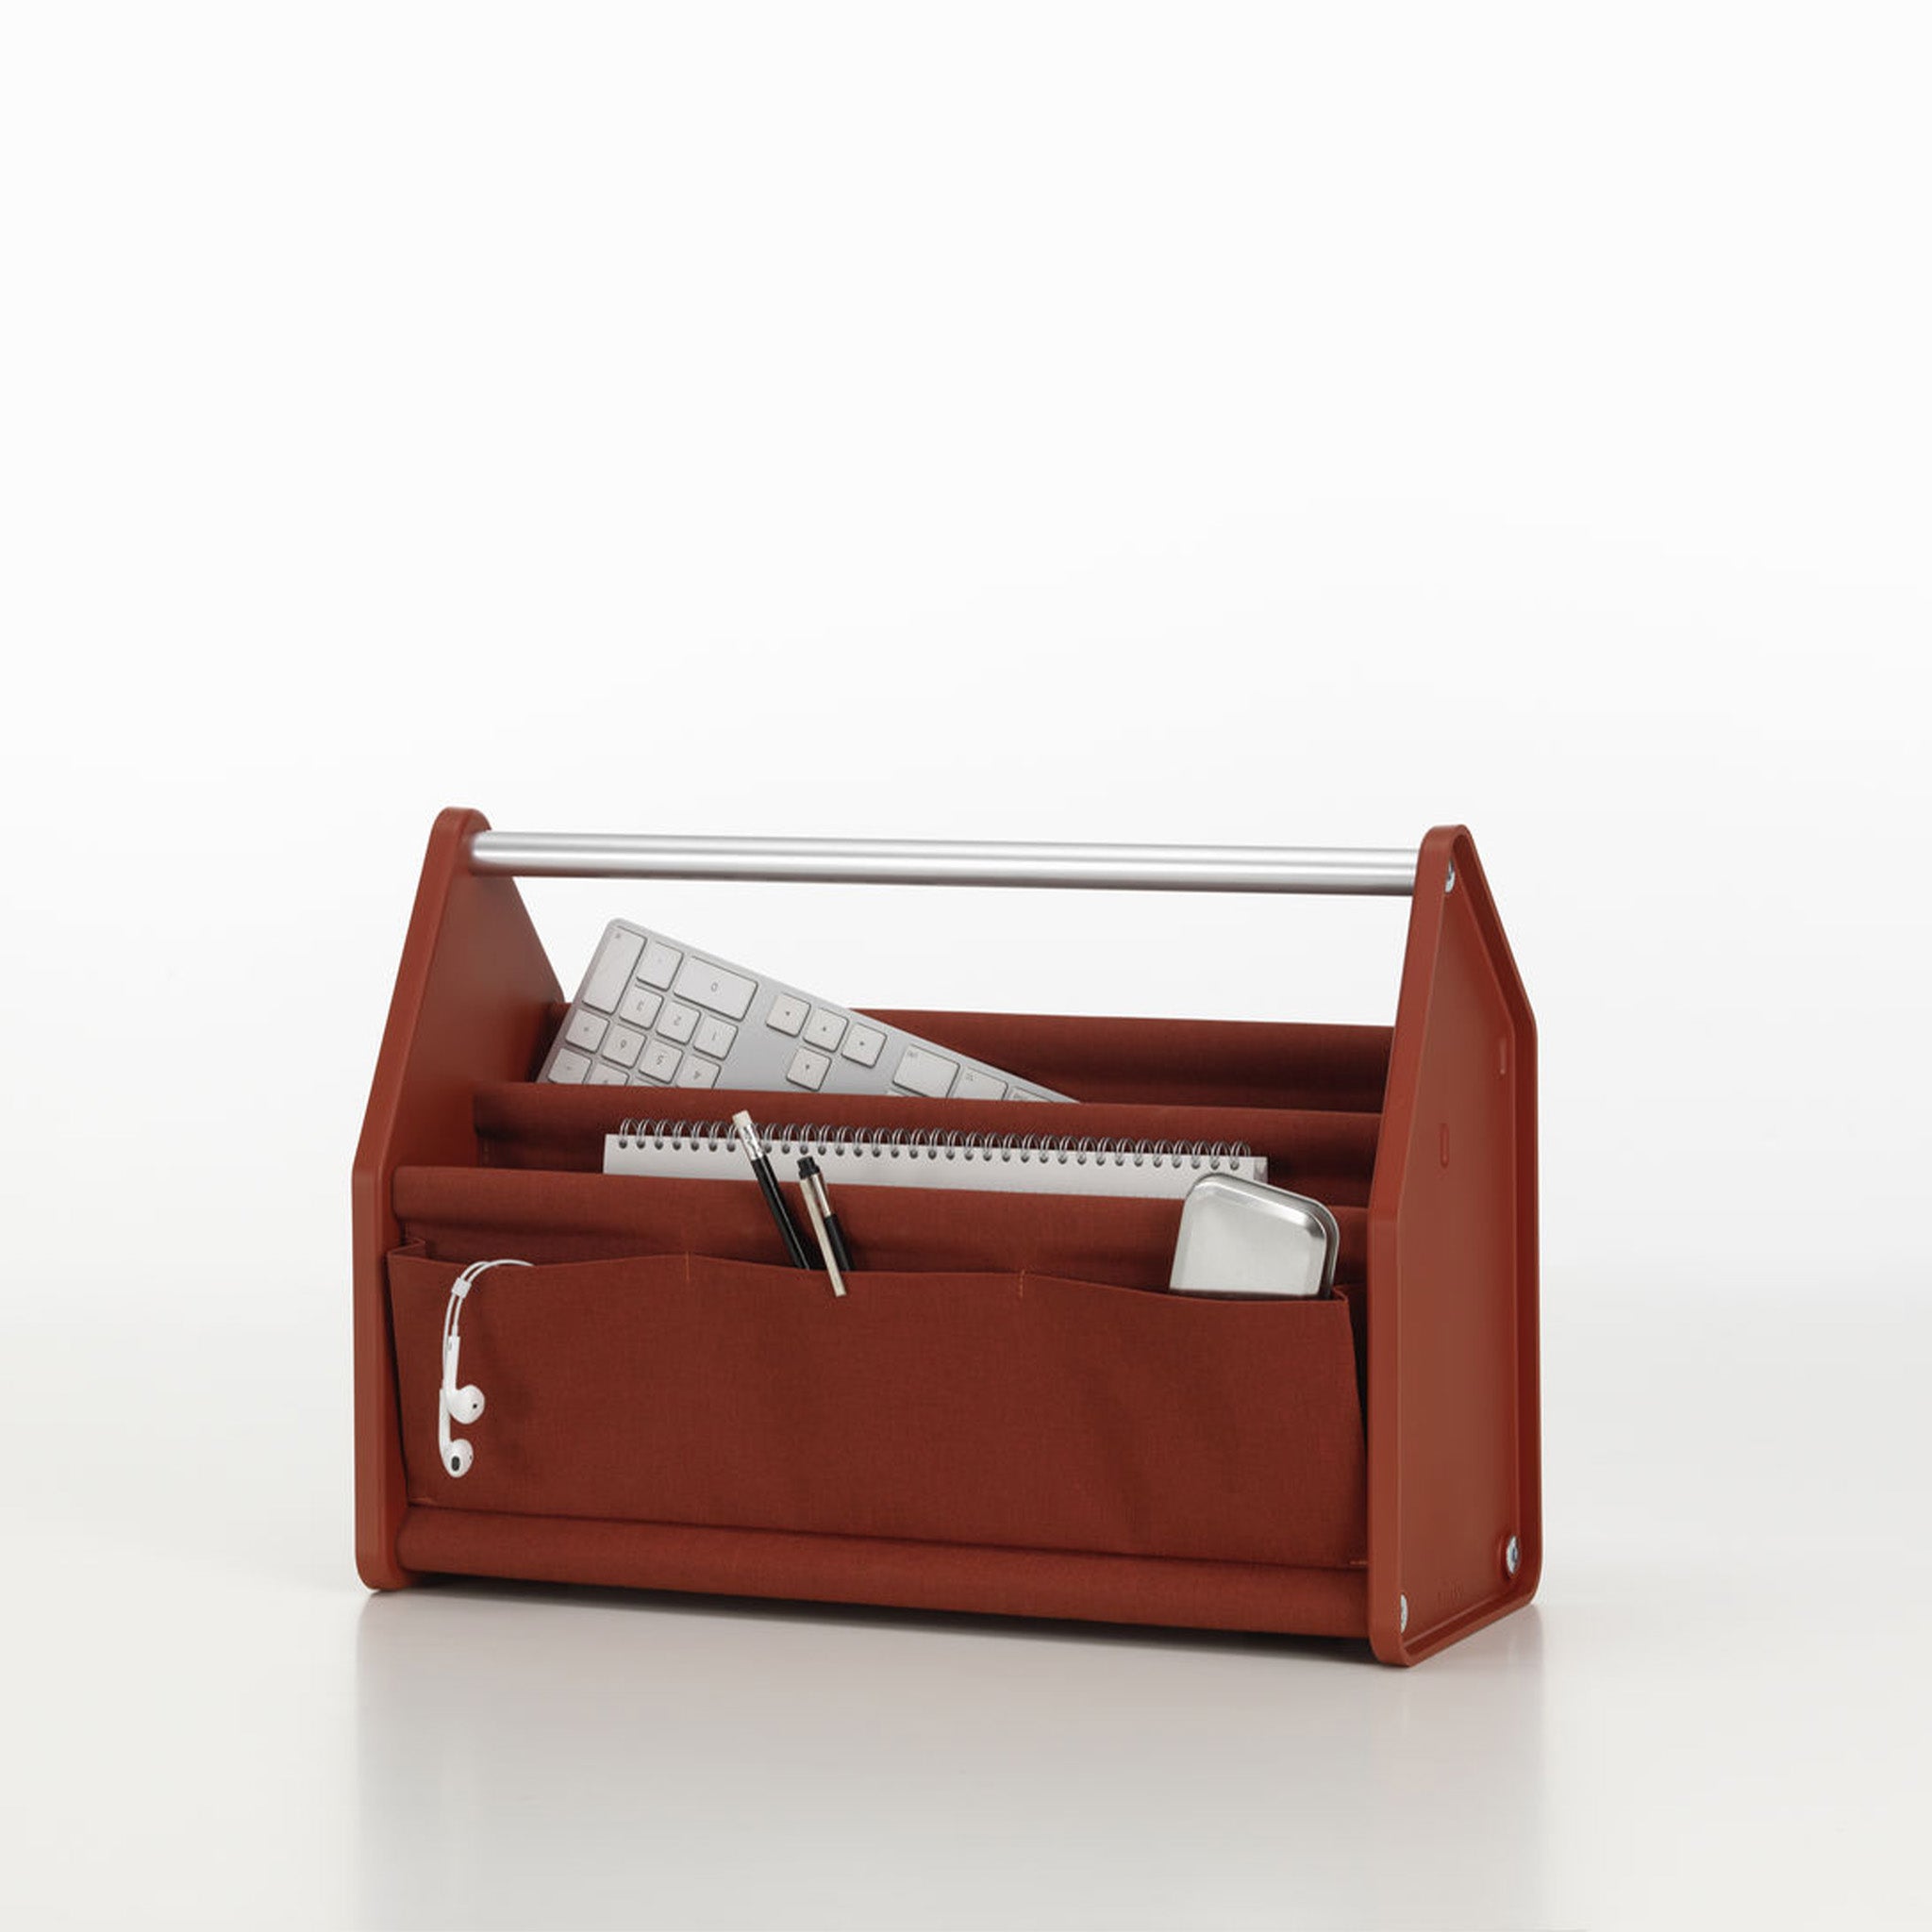 Locker Box by Konstantin Grcic for Vitra